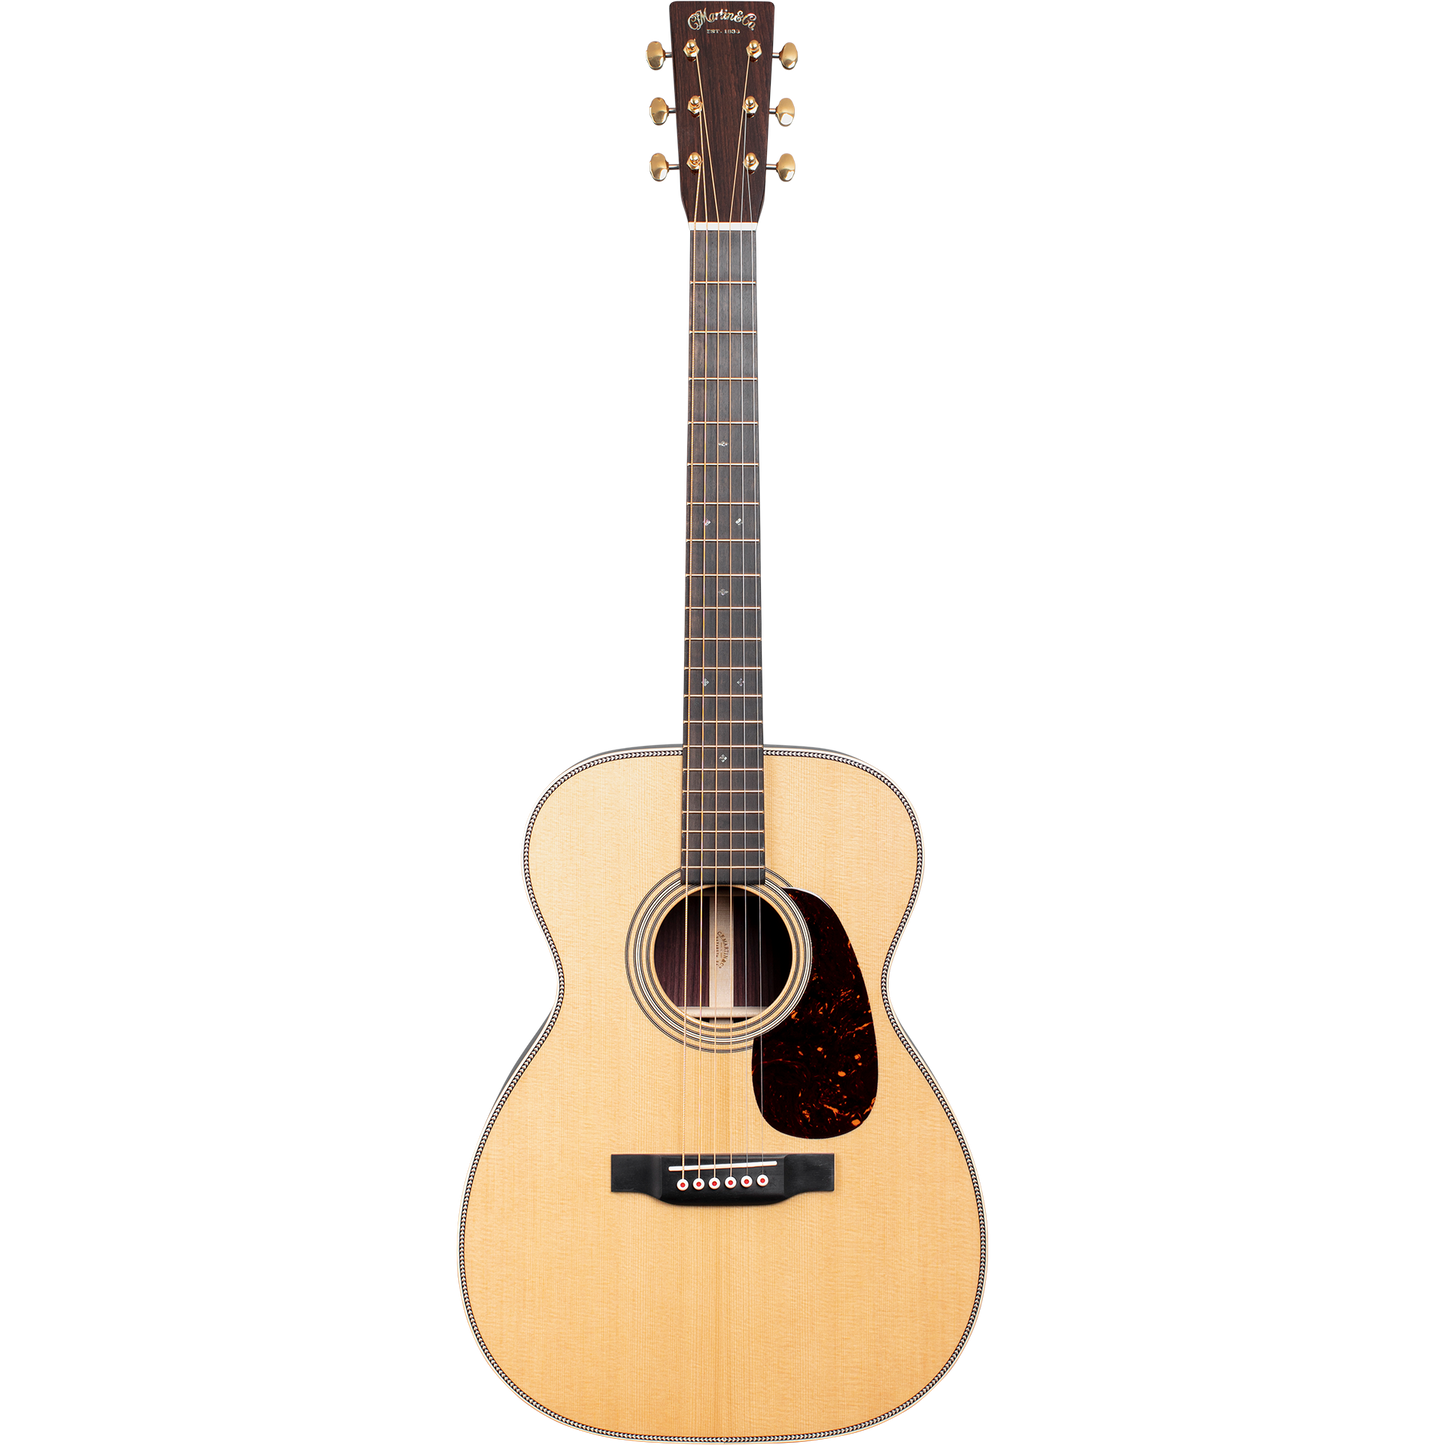 Martin 00-28 Modern Deluxe Acoustic Guitar